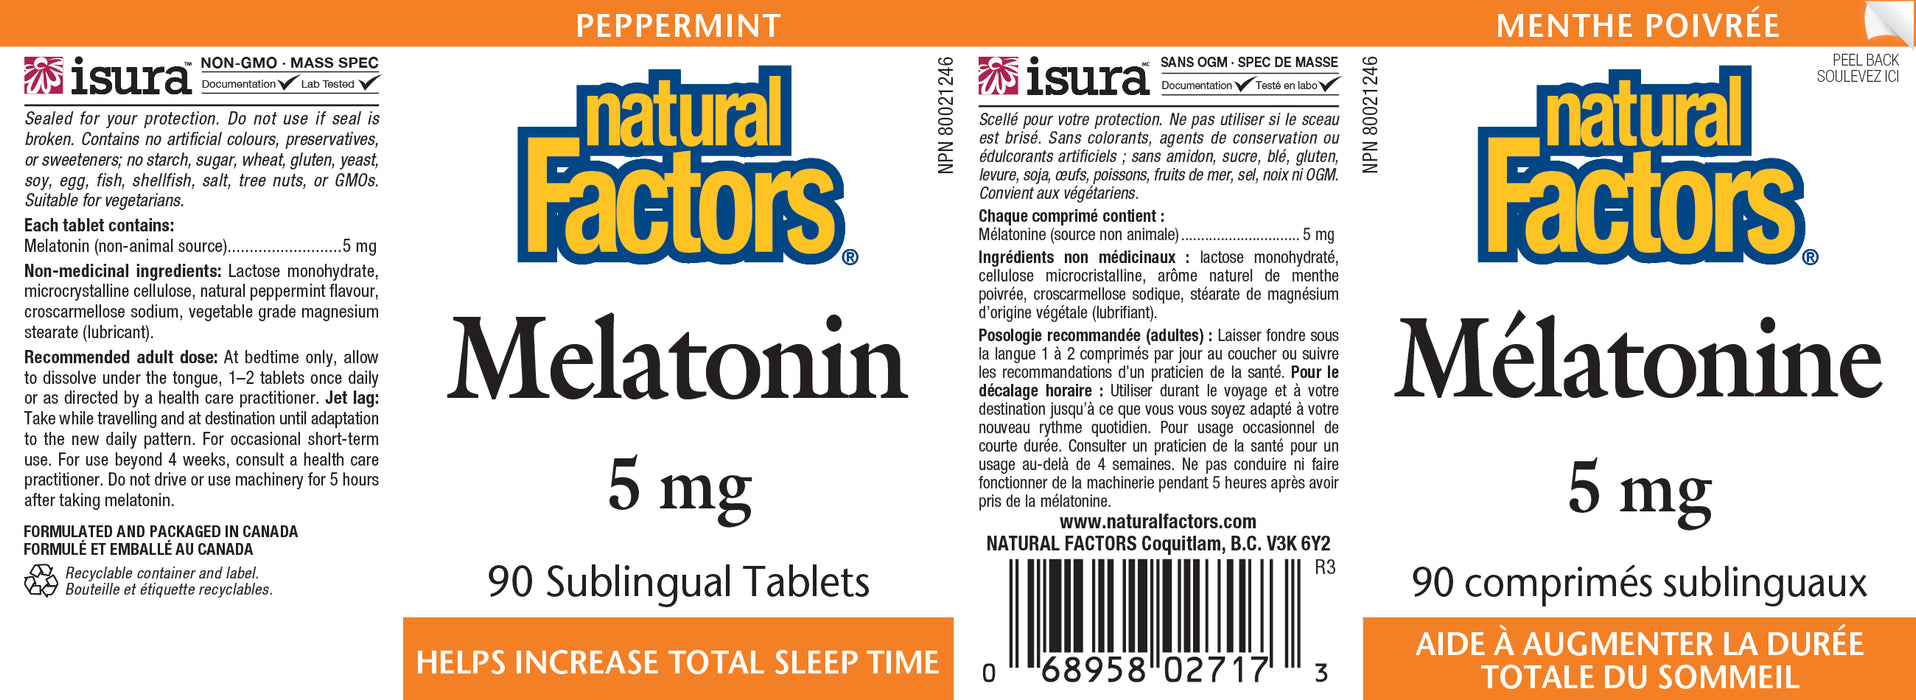 Natural Factors Melatonin - 5mg Peppermint - 90 Sublingual Tablets